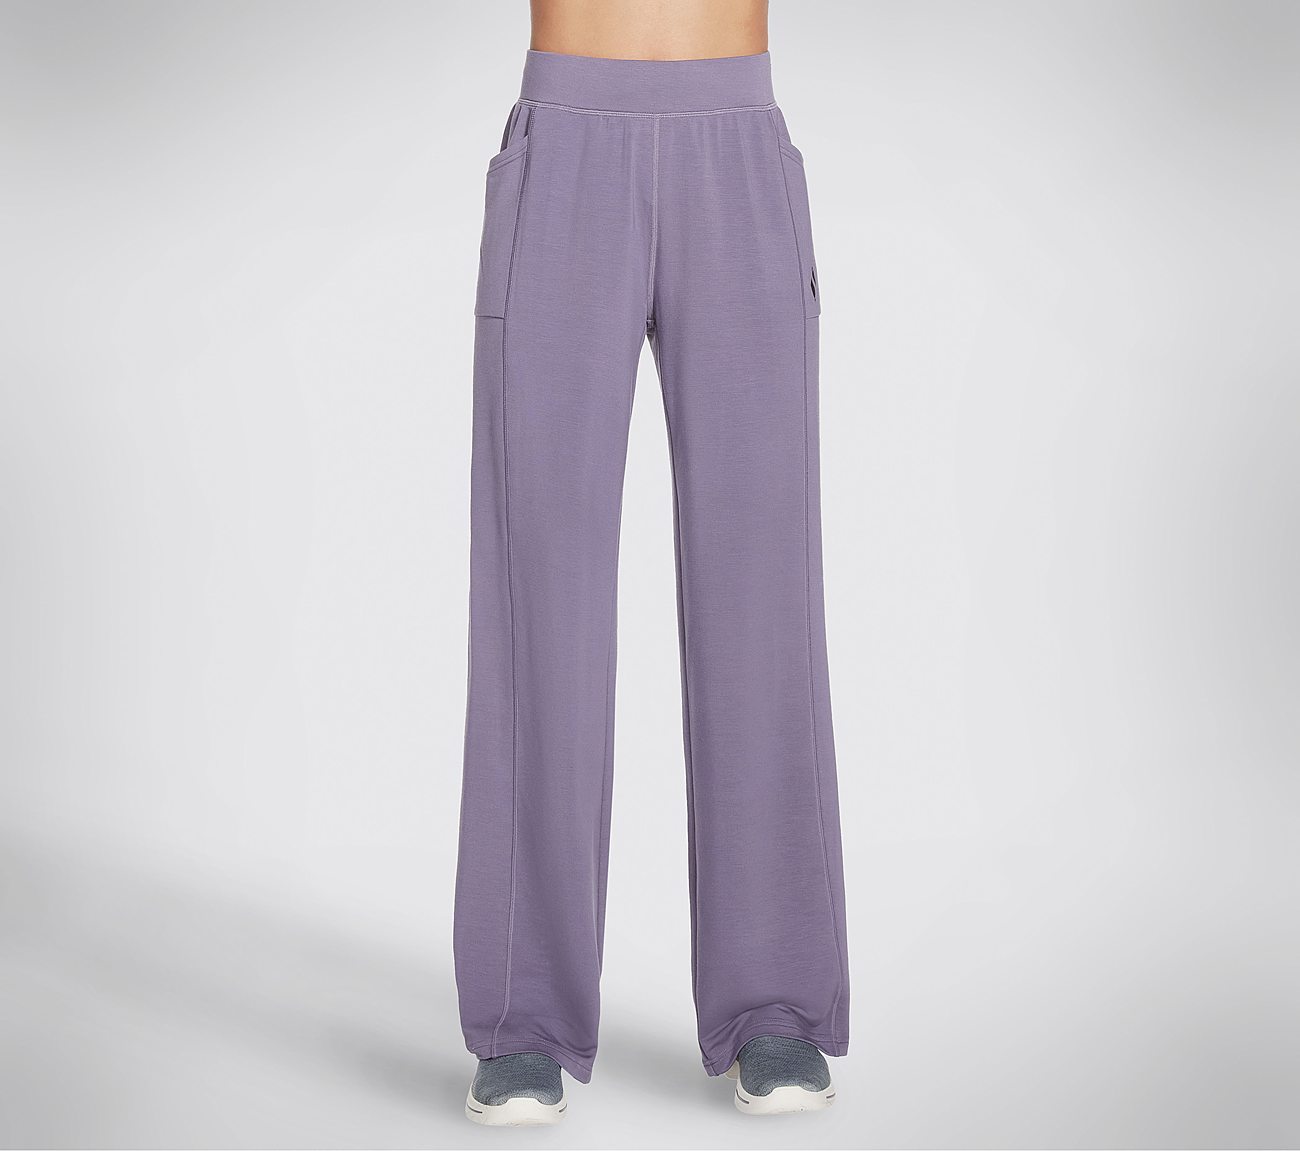 Skechers Restful 4 Pocket Pant  Grey Purple Loose Pants For Women